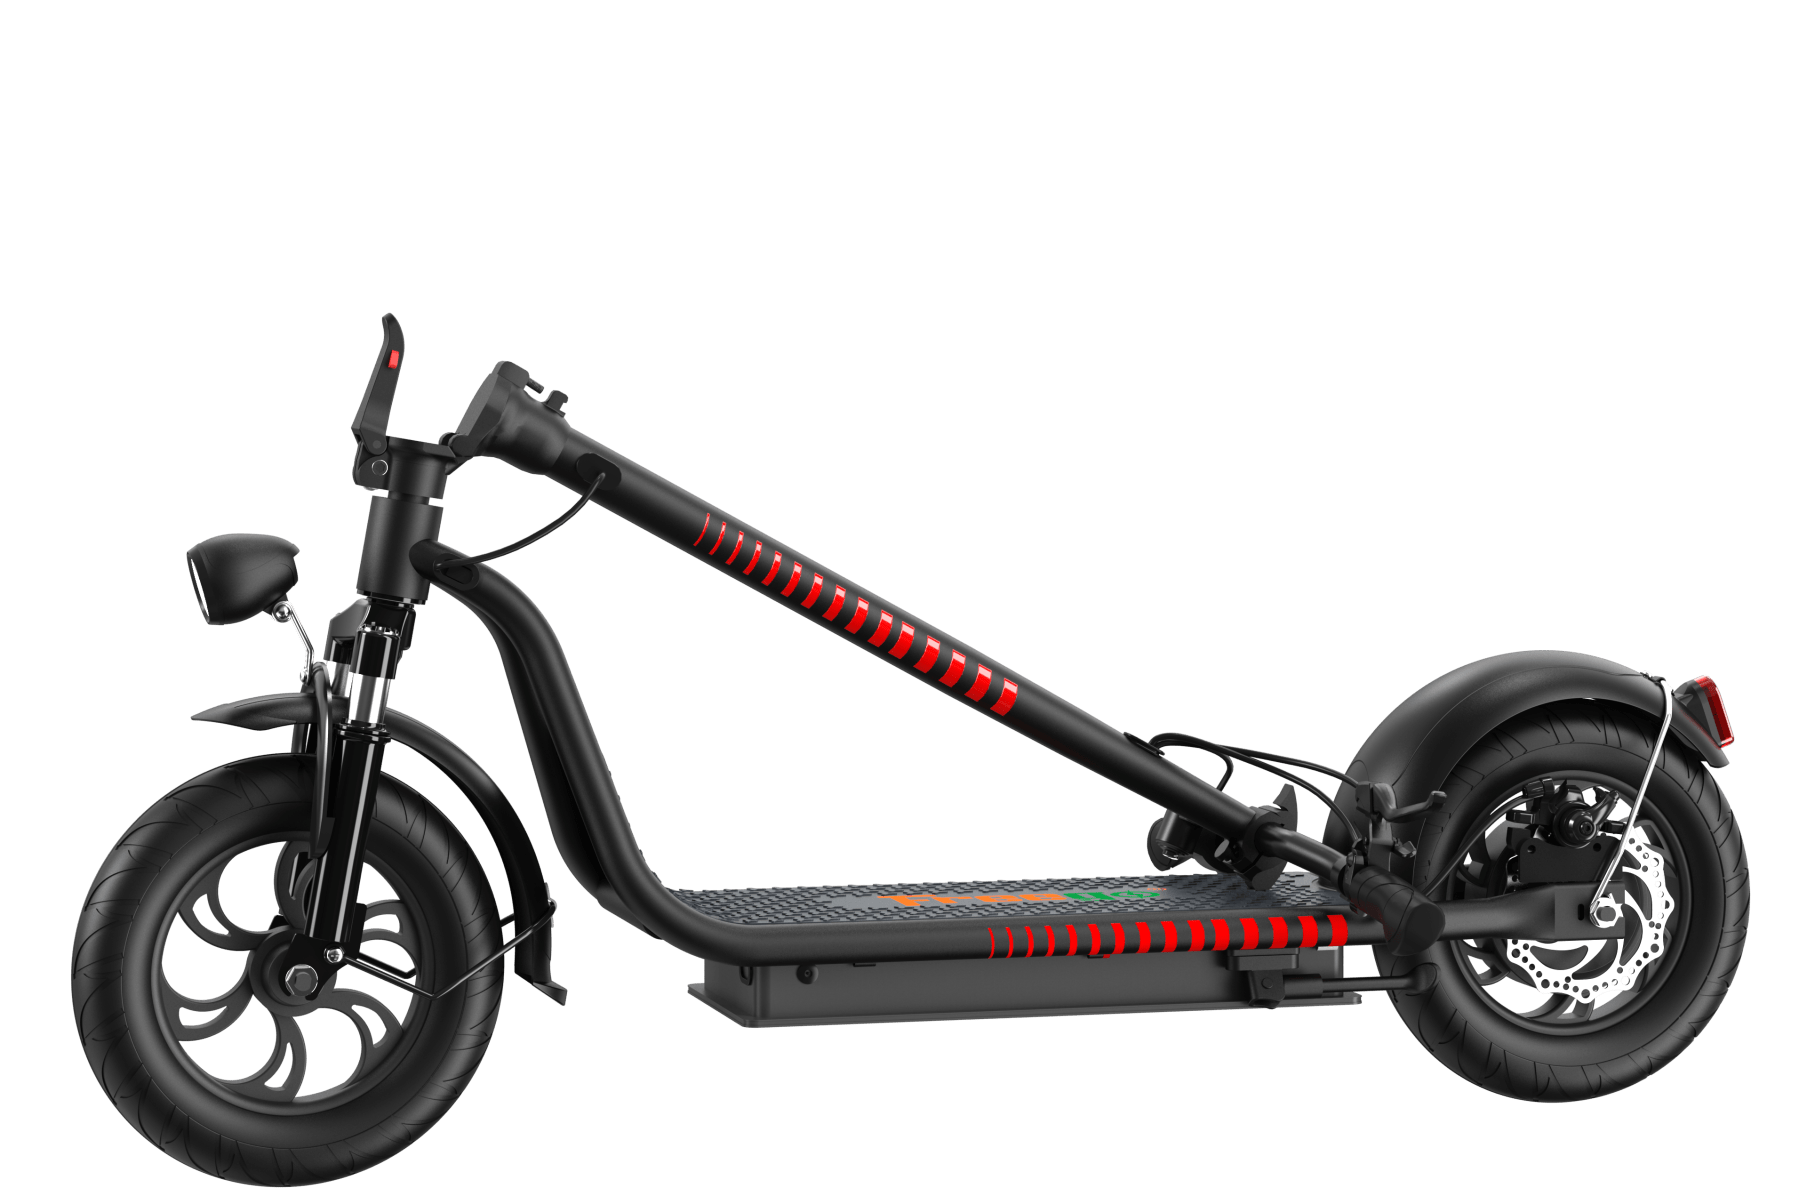 wolf breken Pamflet 12 inch Large Wheel Fast Electric Scooter | Indiegogo